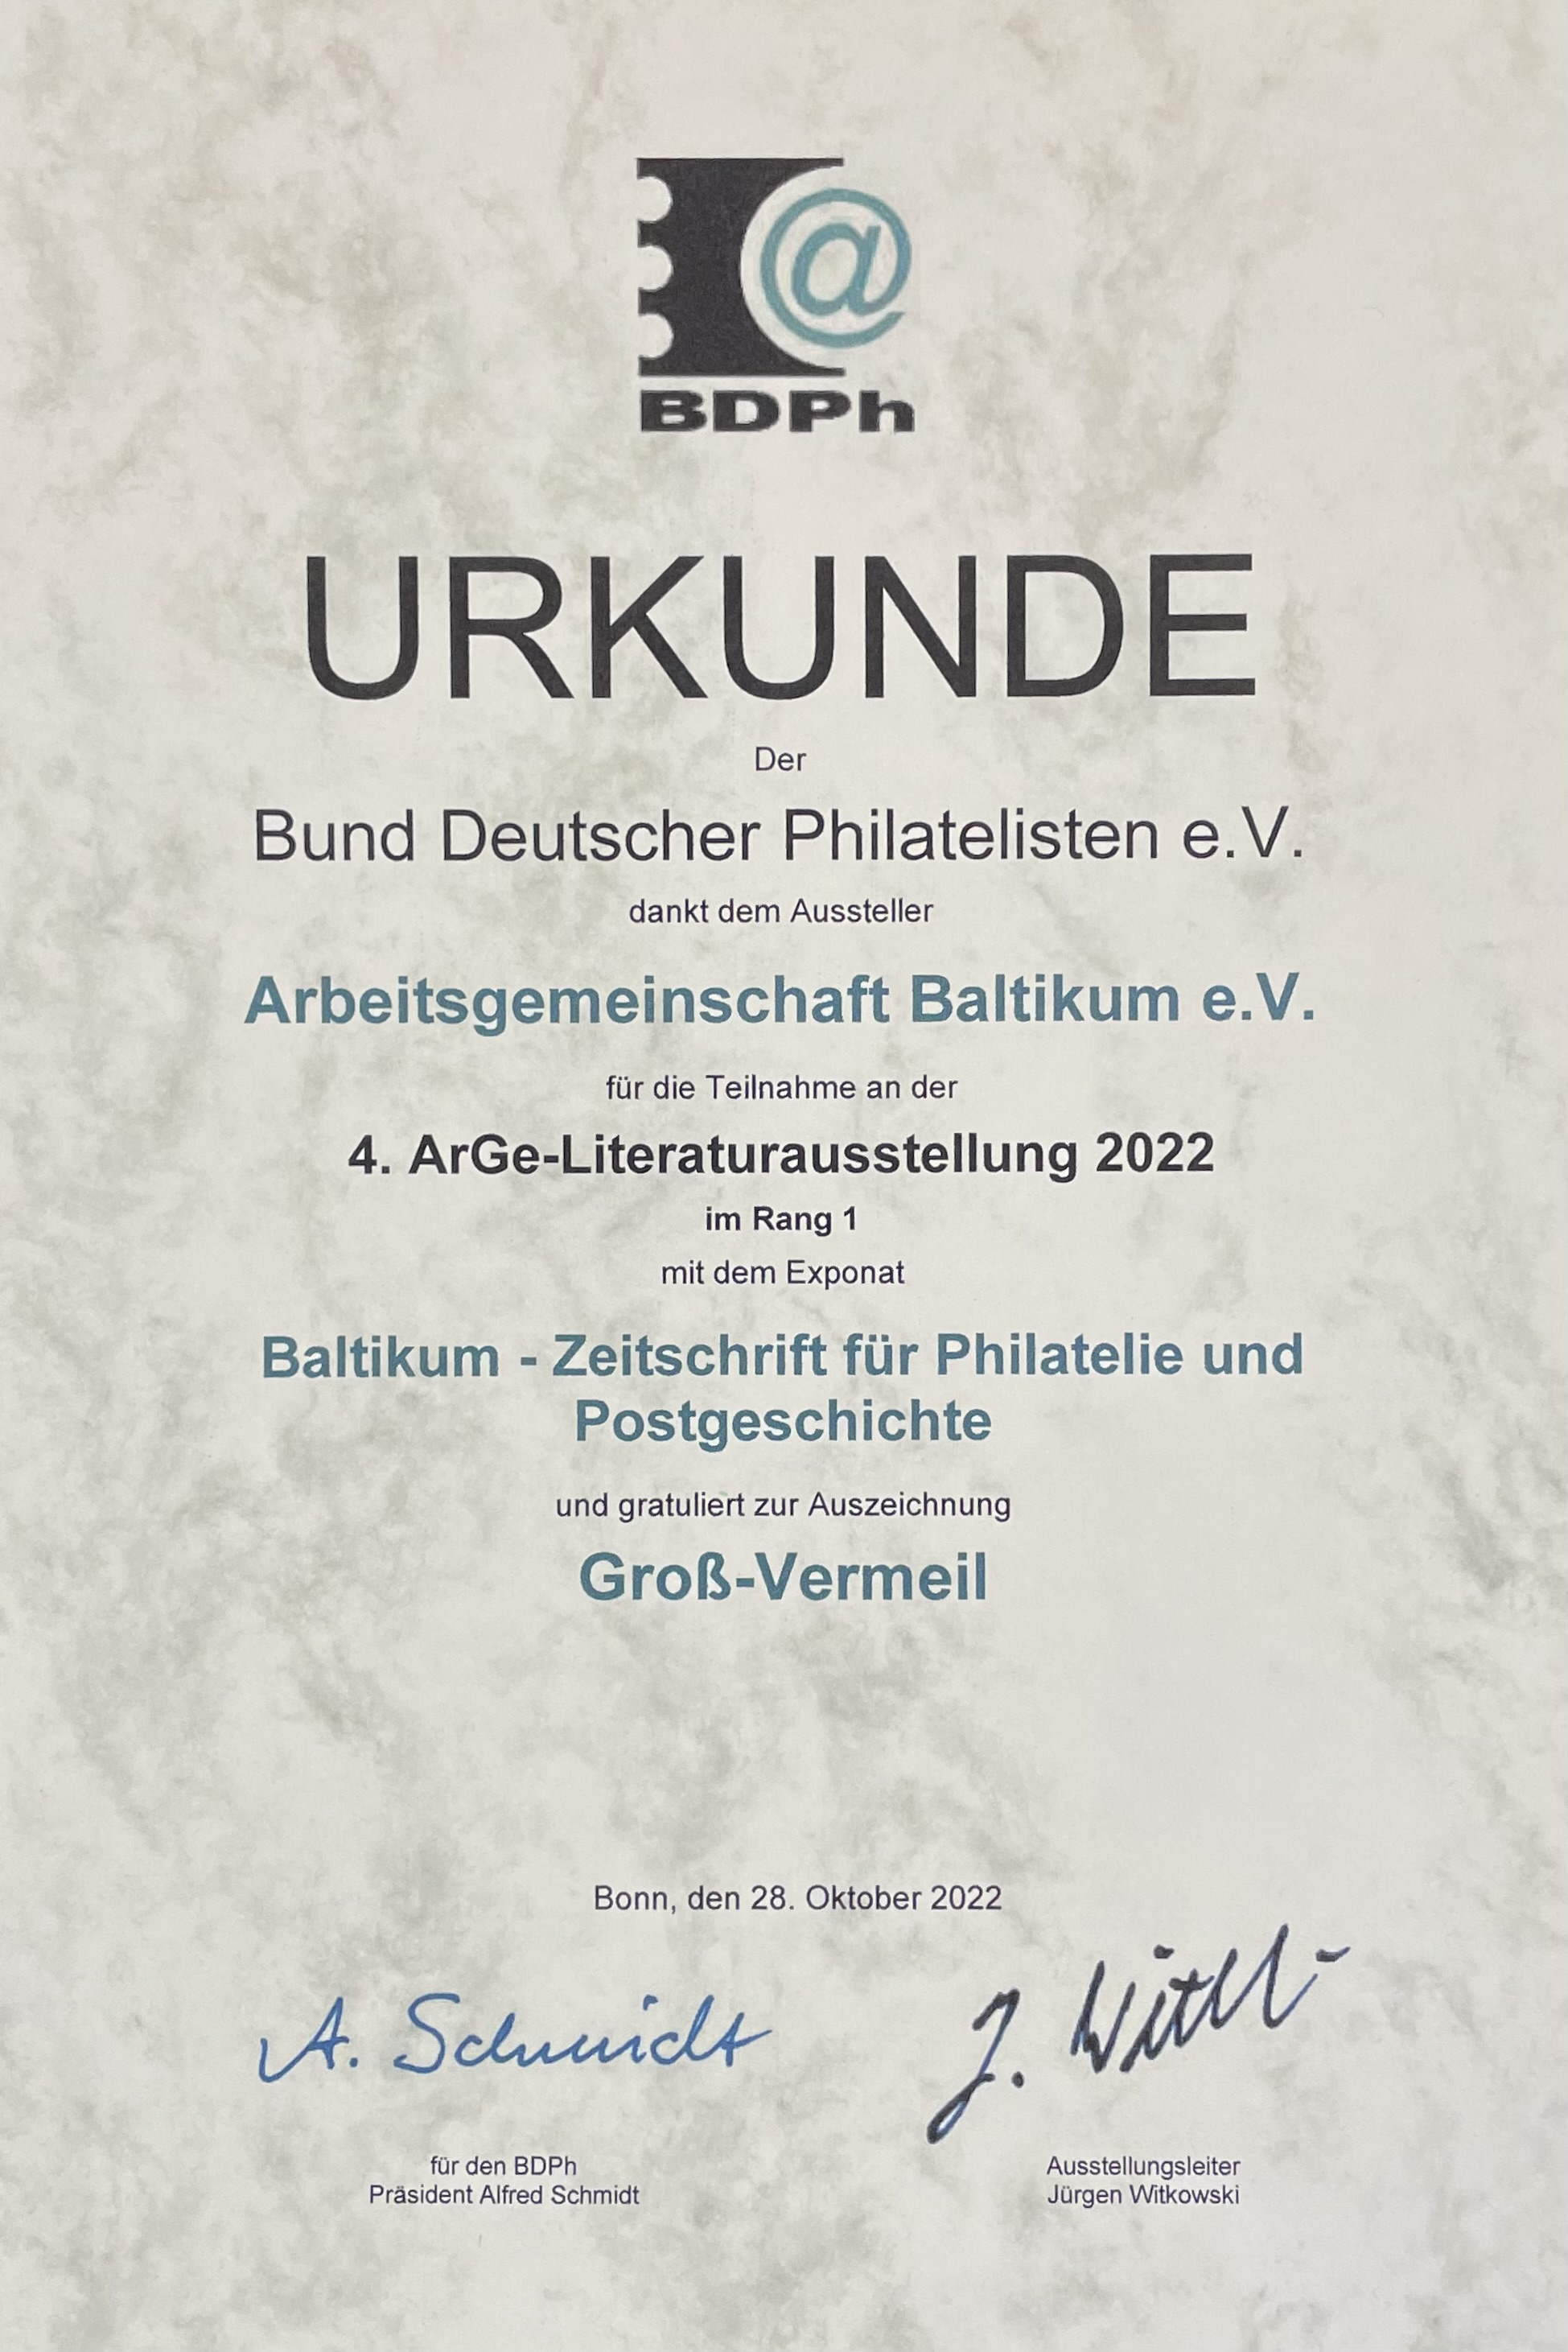 4th ArGe literature exhibition of the BDPh 2022: Grand-Vermeil (84 p.) for the BALTIKUM